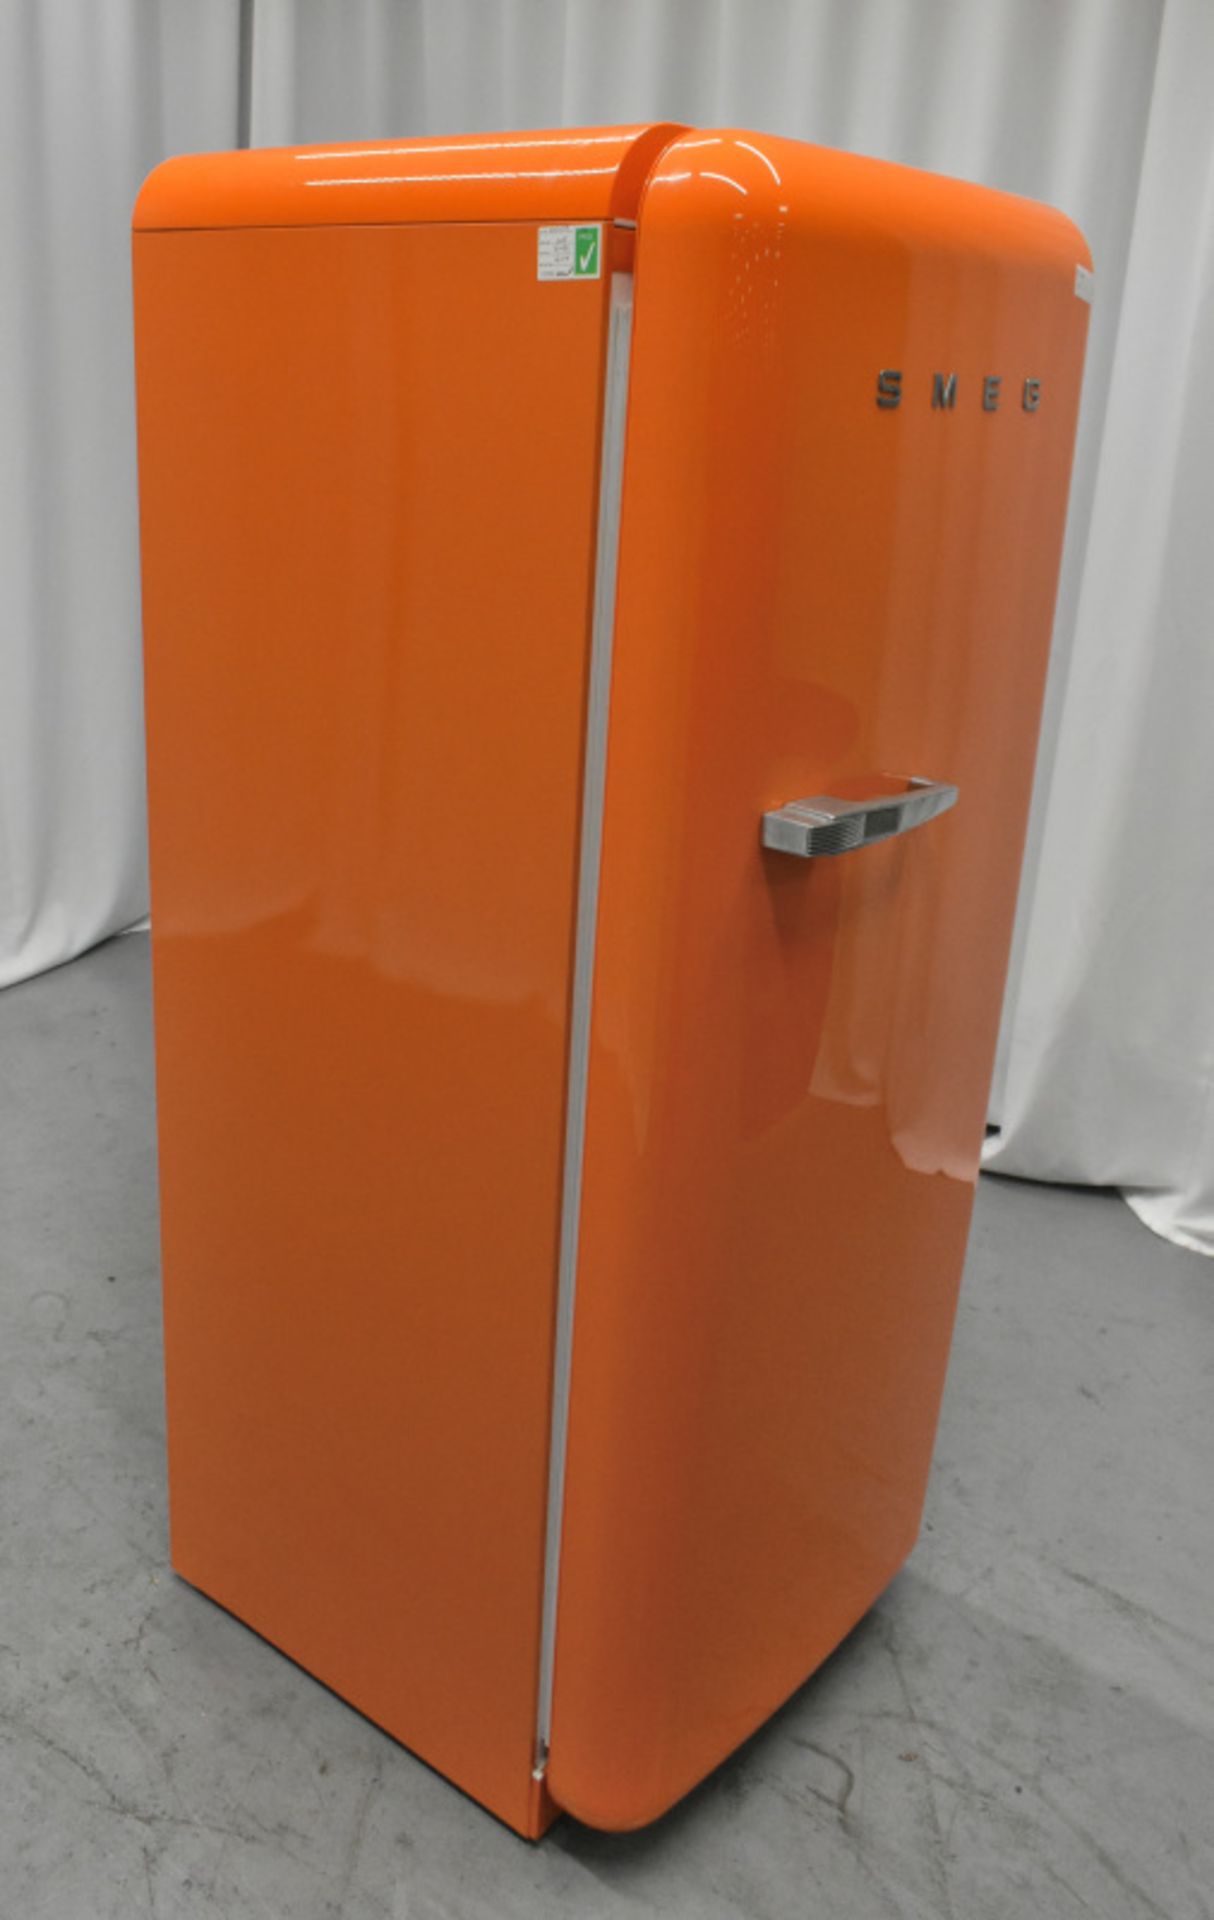 Smeg Retro Orange Fridge - Model FAB28QO1 with small freezer compartment - 600 x 1510 x 54 - Image 3 of 9